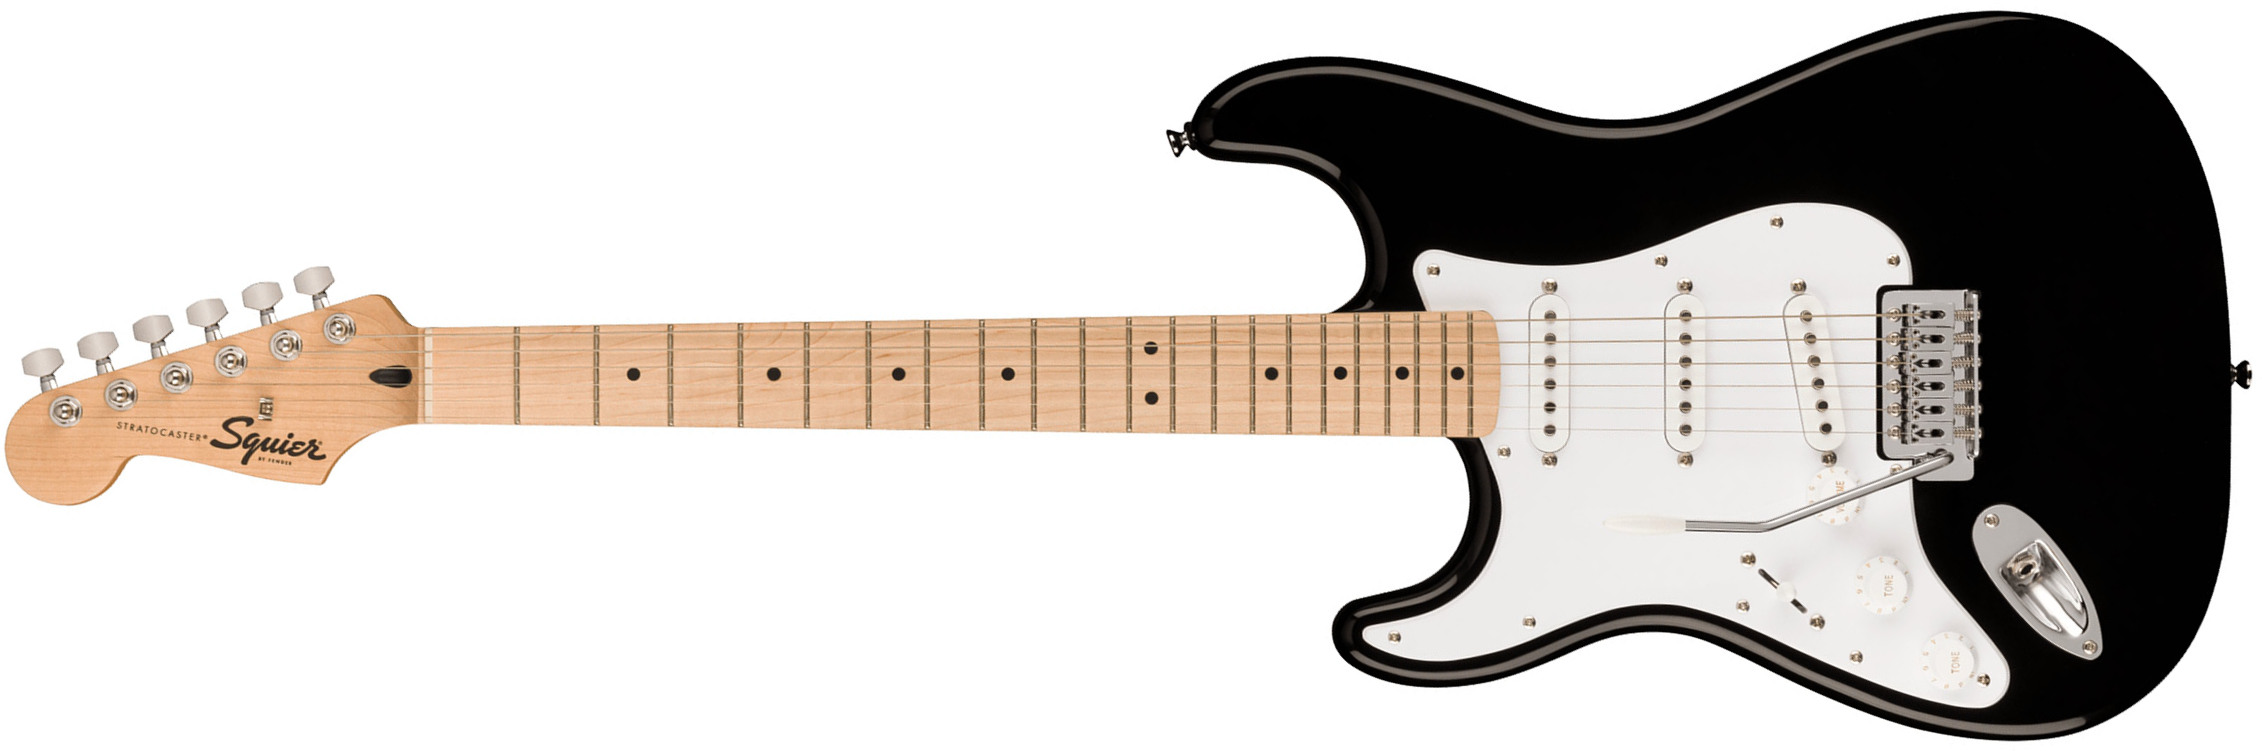 Squier Strat Sonic Lh Gaucher 3s Trem Mn - Black - Left-handed electric guitar - Main picture